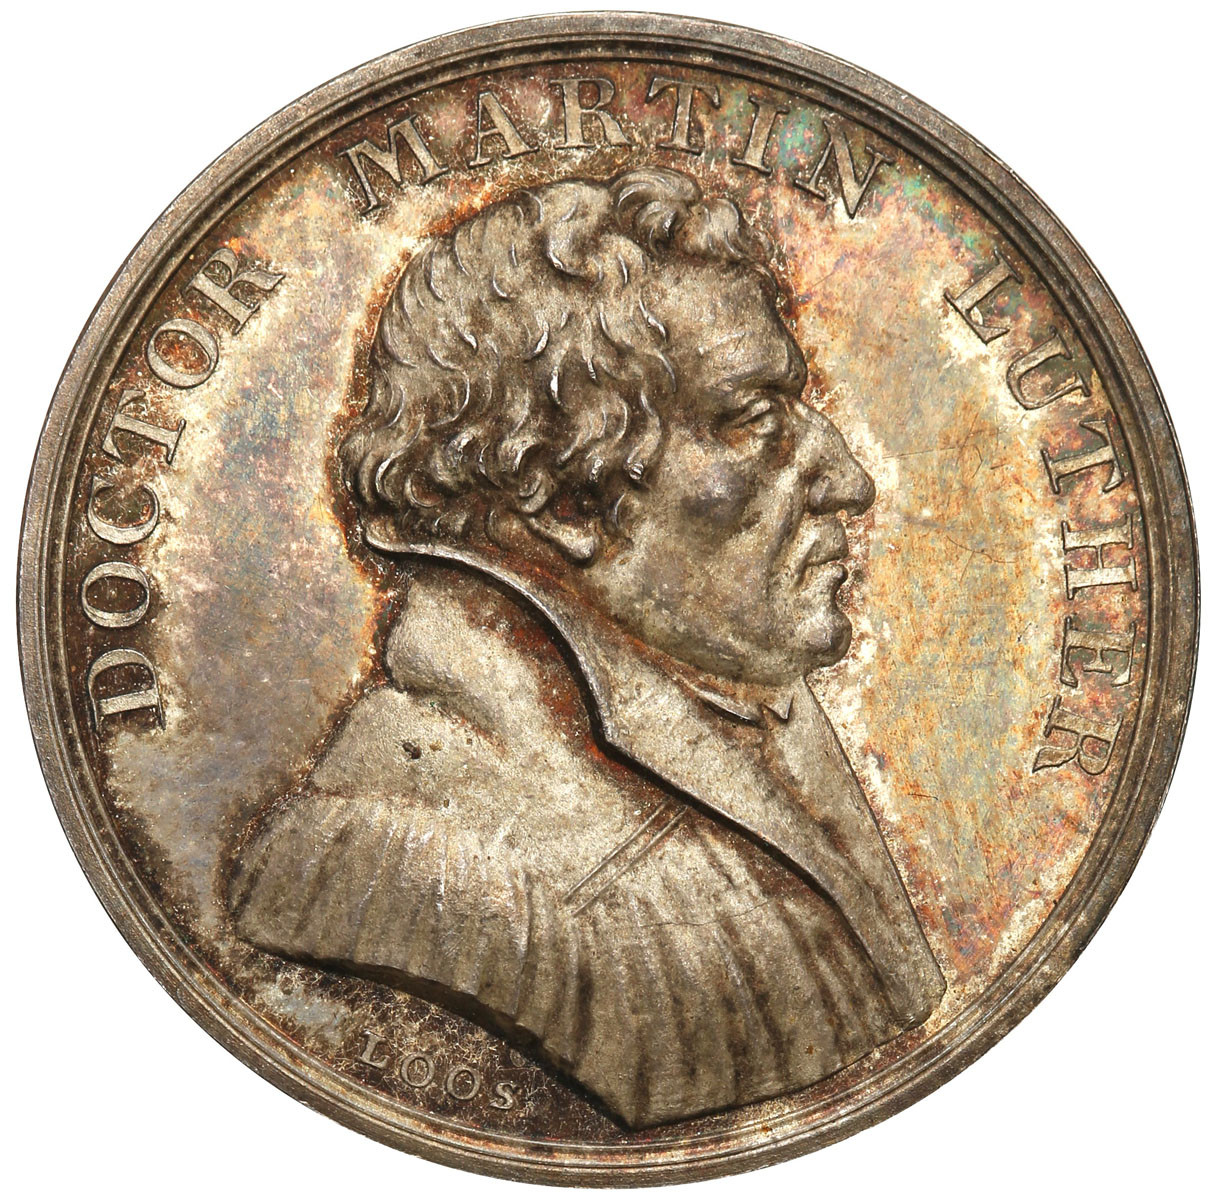 Niemcy, Martin Luther. Medal 1817, srebro